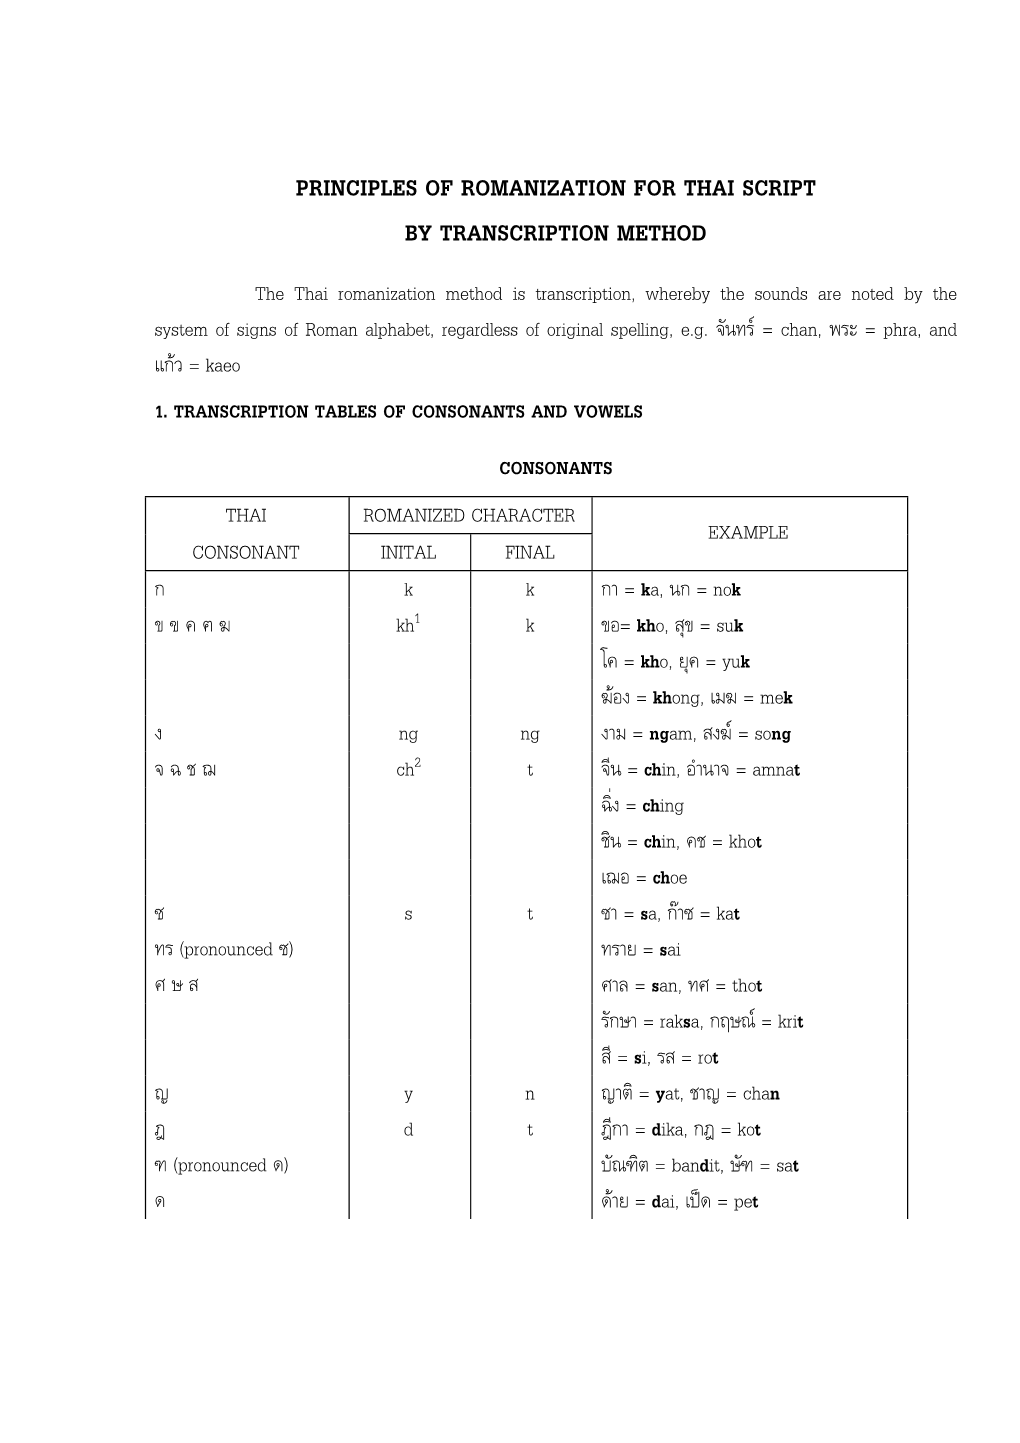 Principles of Romanization for Thai Script by Transcription Method